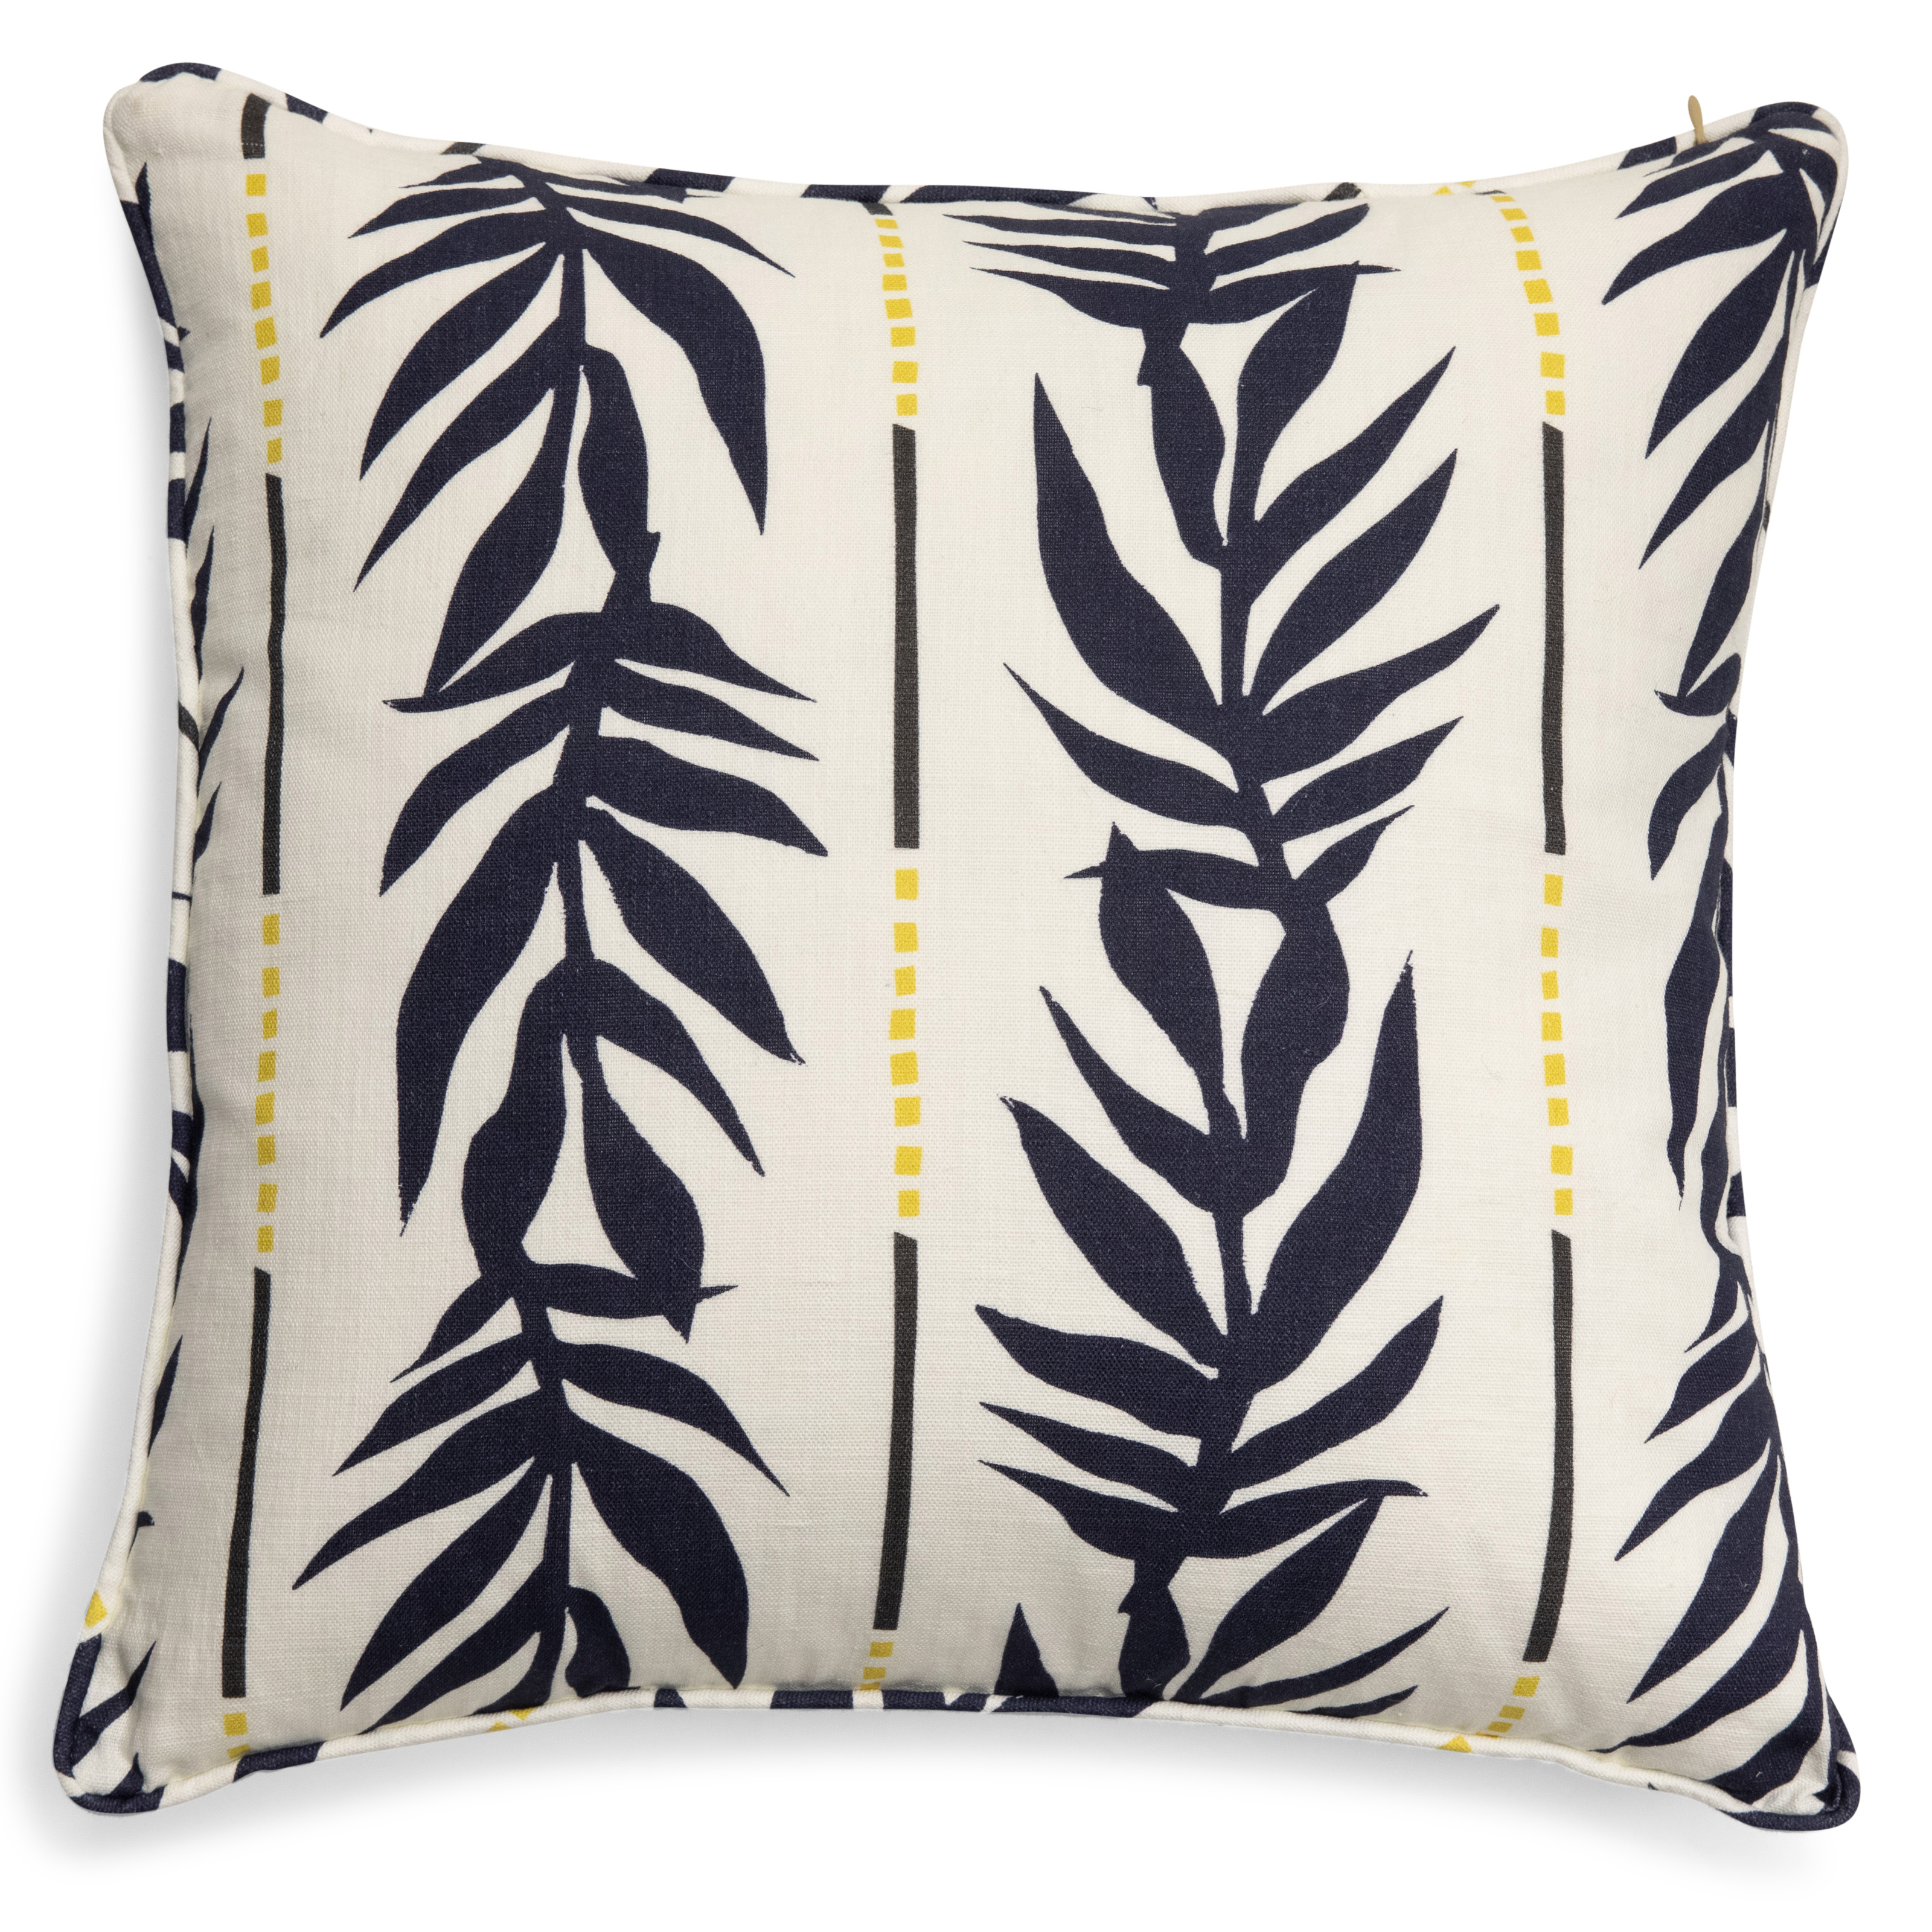  LiLiPi Bonjour Decorative Accent Throw Pillow : Beauty